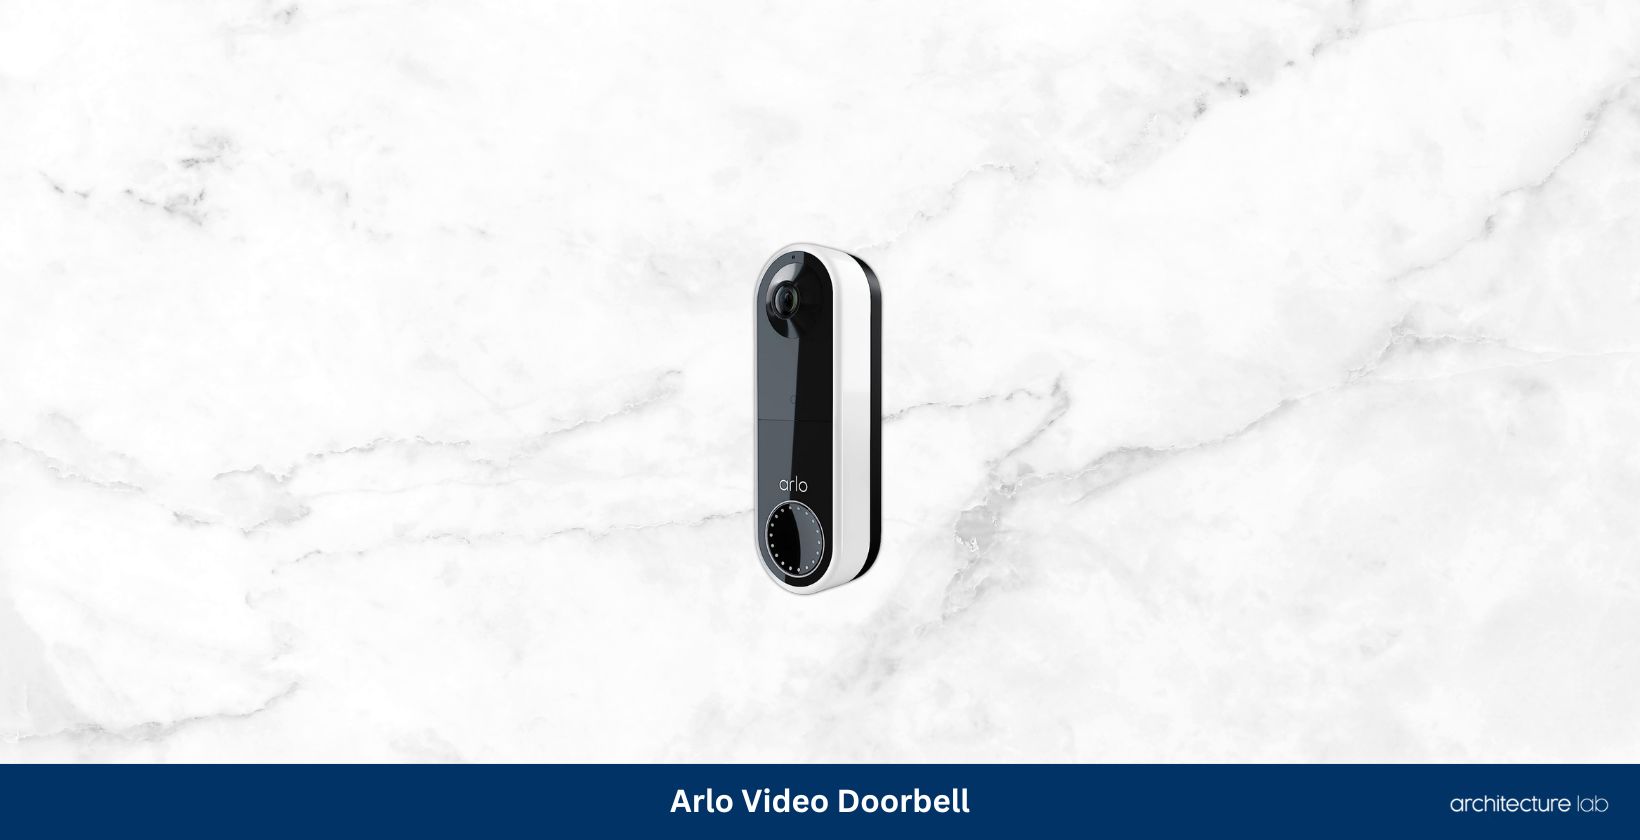 Arlo essential video doorbell avd2001 100nas